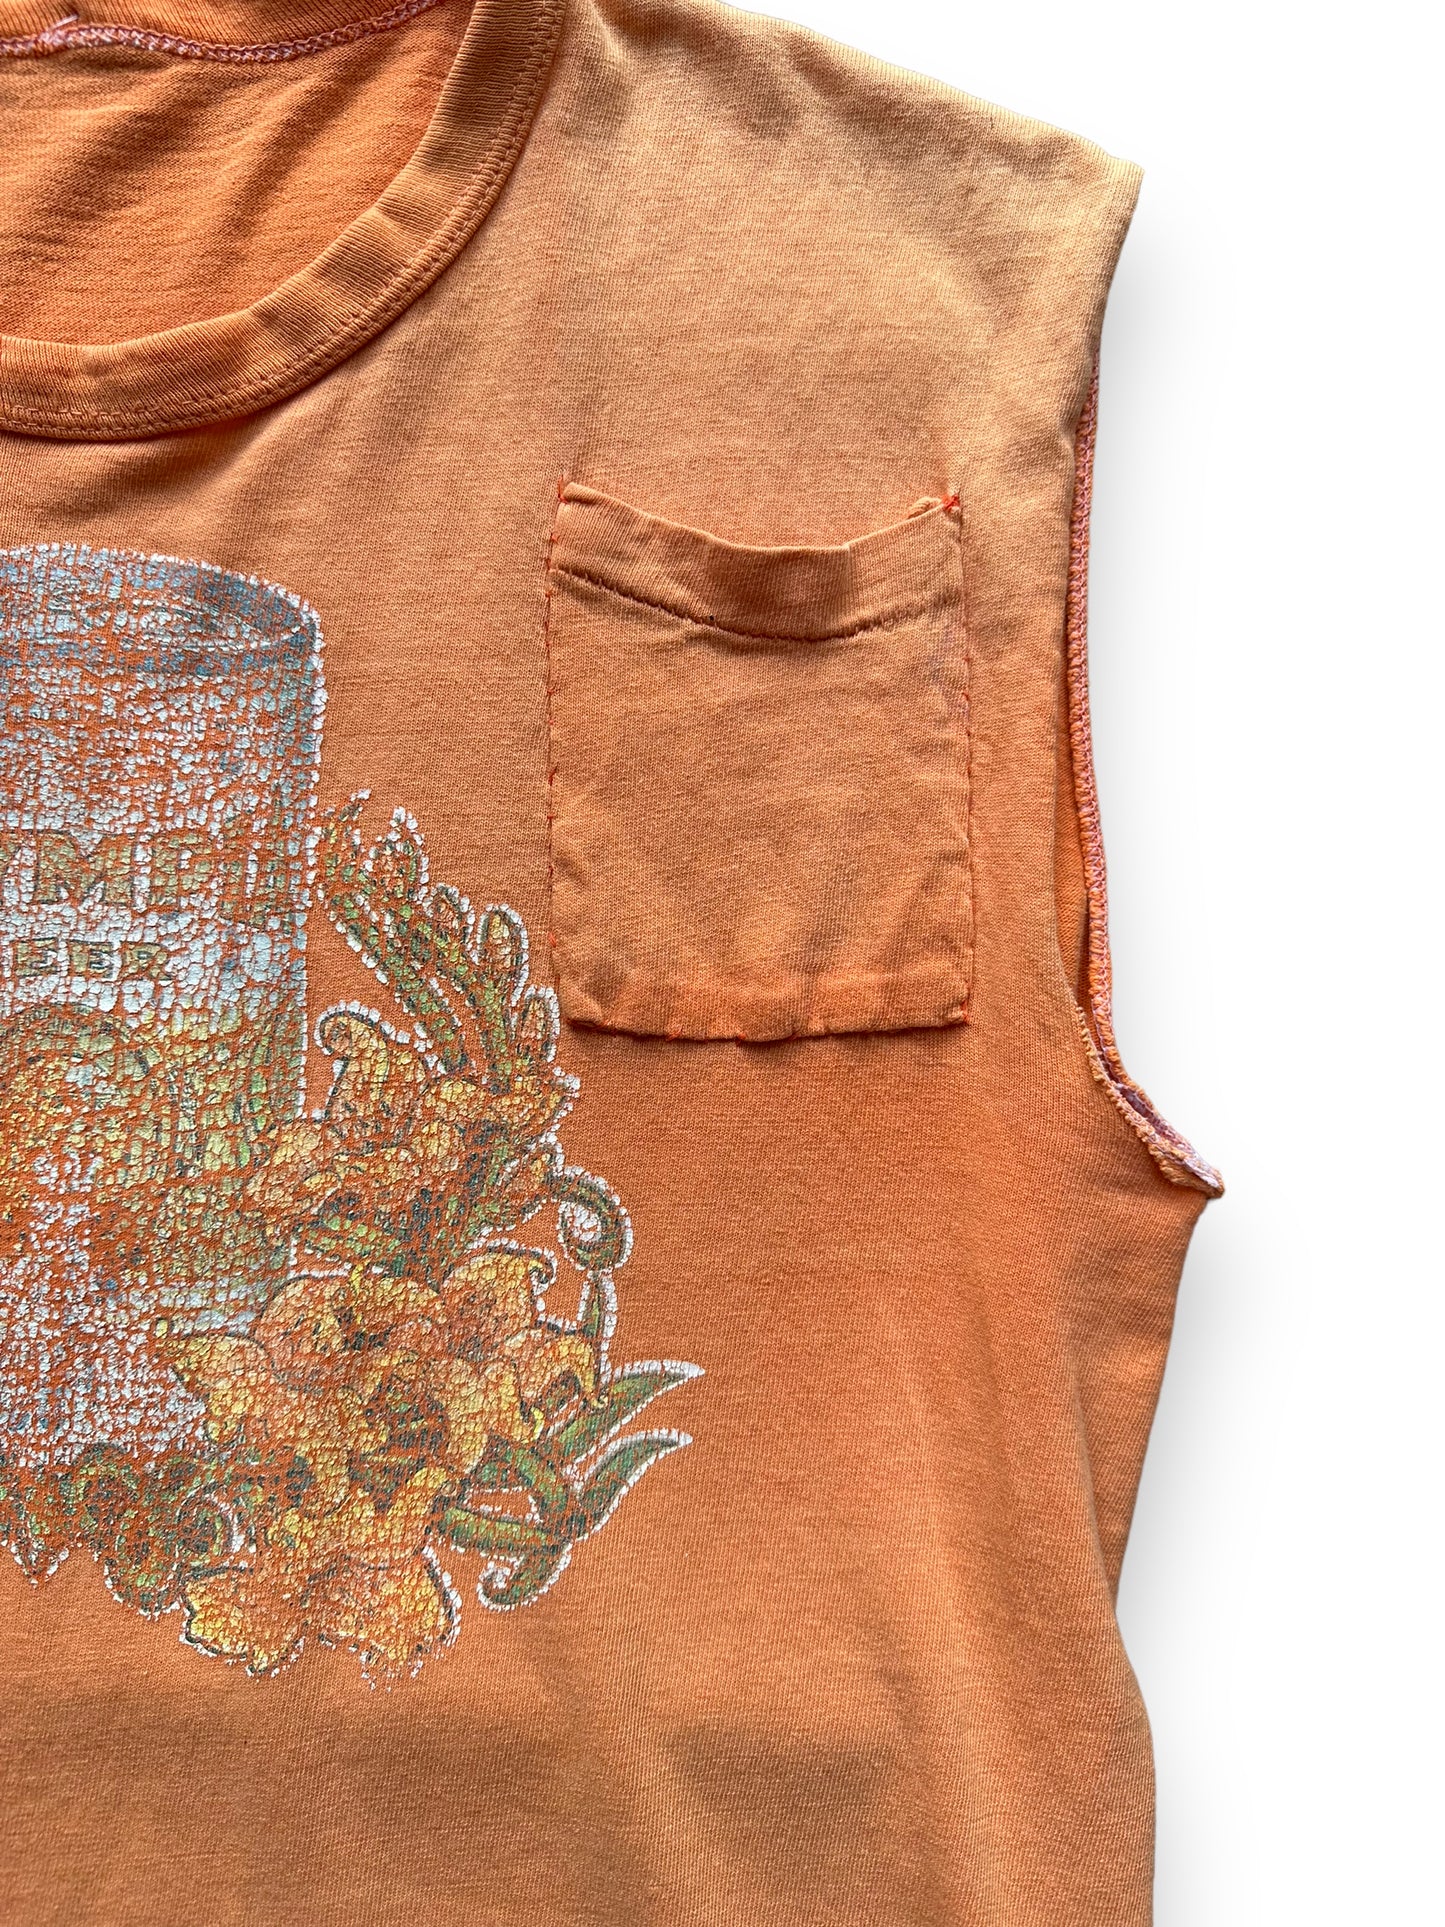 Pocket Detail on Vintage Olympia Beer Sleeveless Pocket Tee SZ M | Vintage Beer T-Shirts Seattle | Barn Owl Vintage Tees Seattle